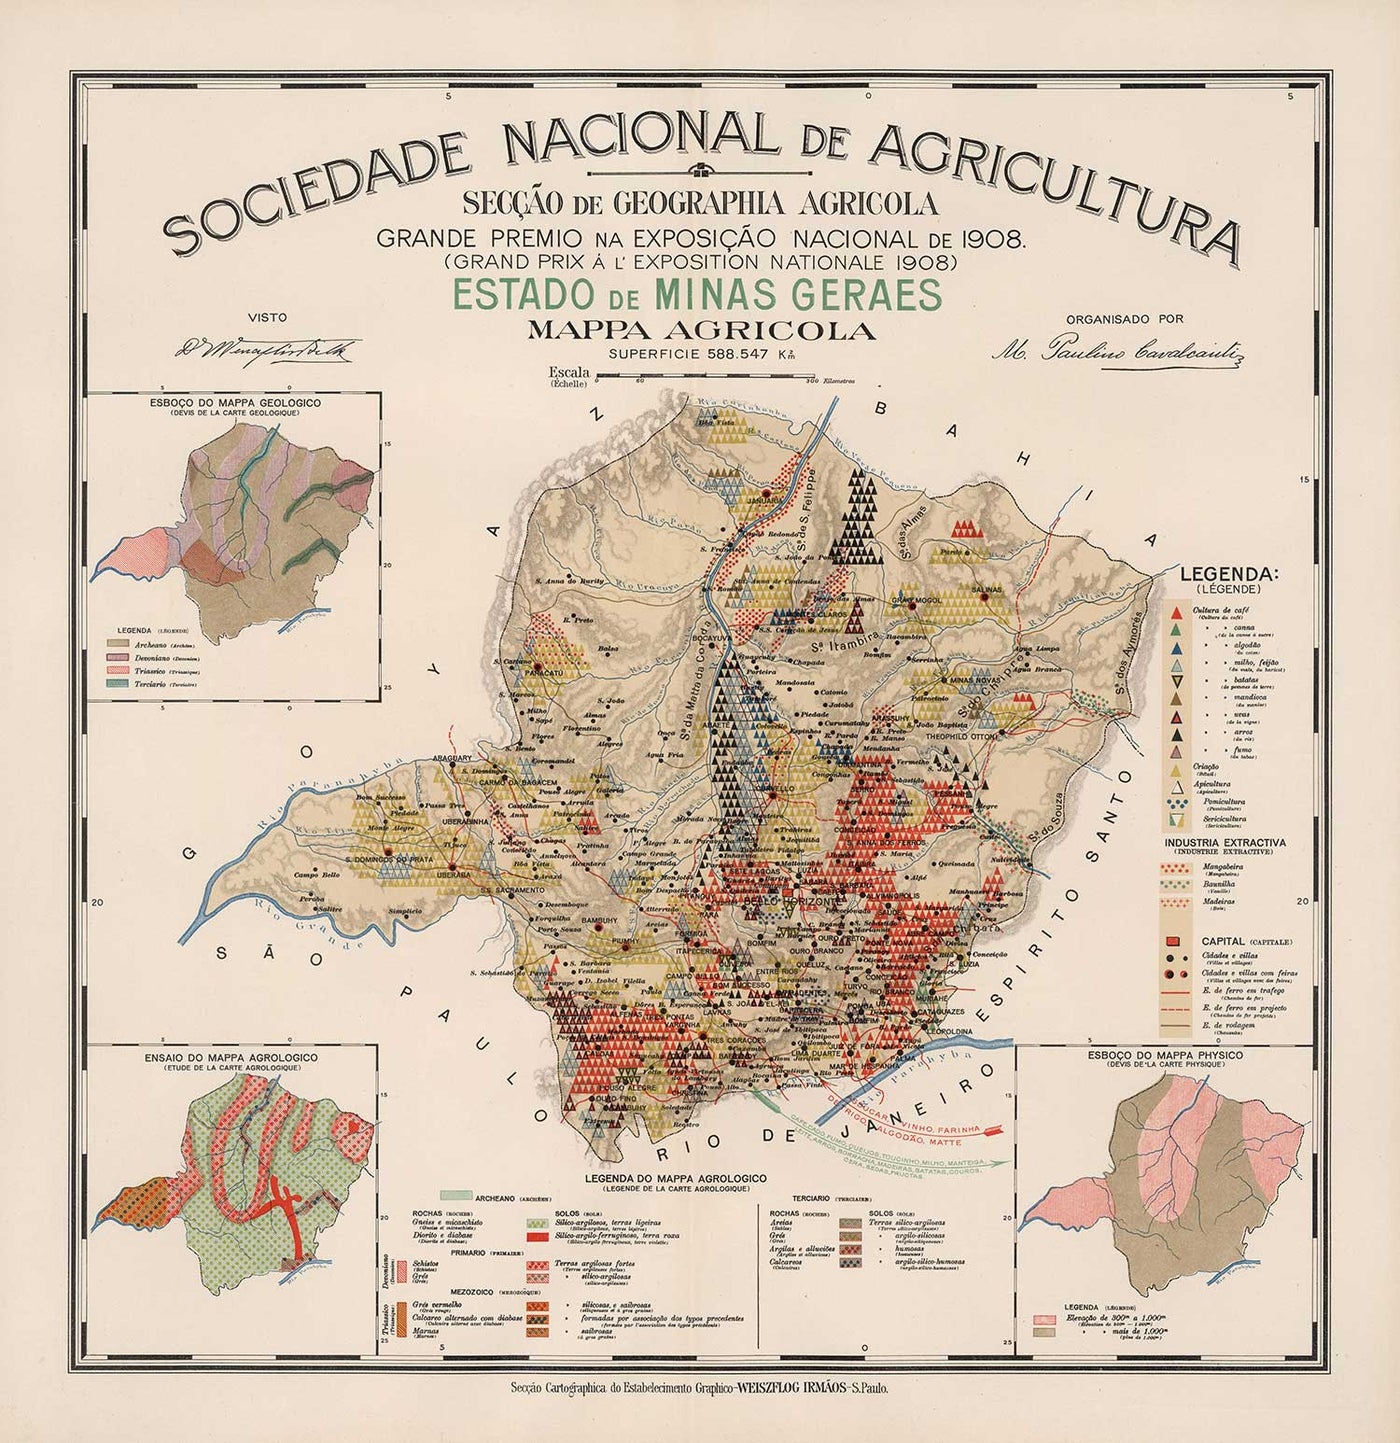 Ancienne carte de Minas Gerais, Brésil en 1908 - Agriculture, Géologie, Roches, Sols - Belo Horizonte, Uberlandia, Uberaba, Juiz de Fora, Curvelo